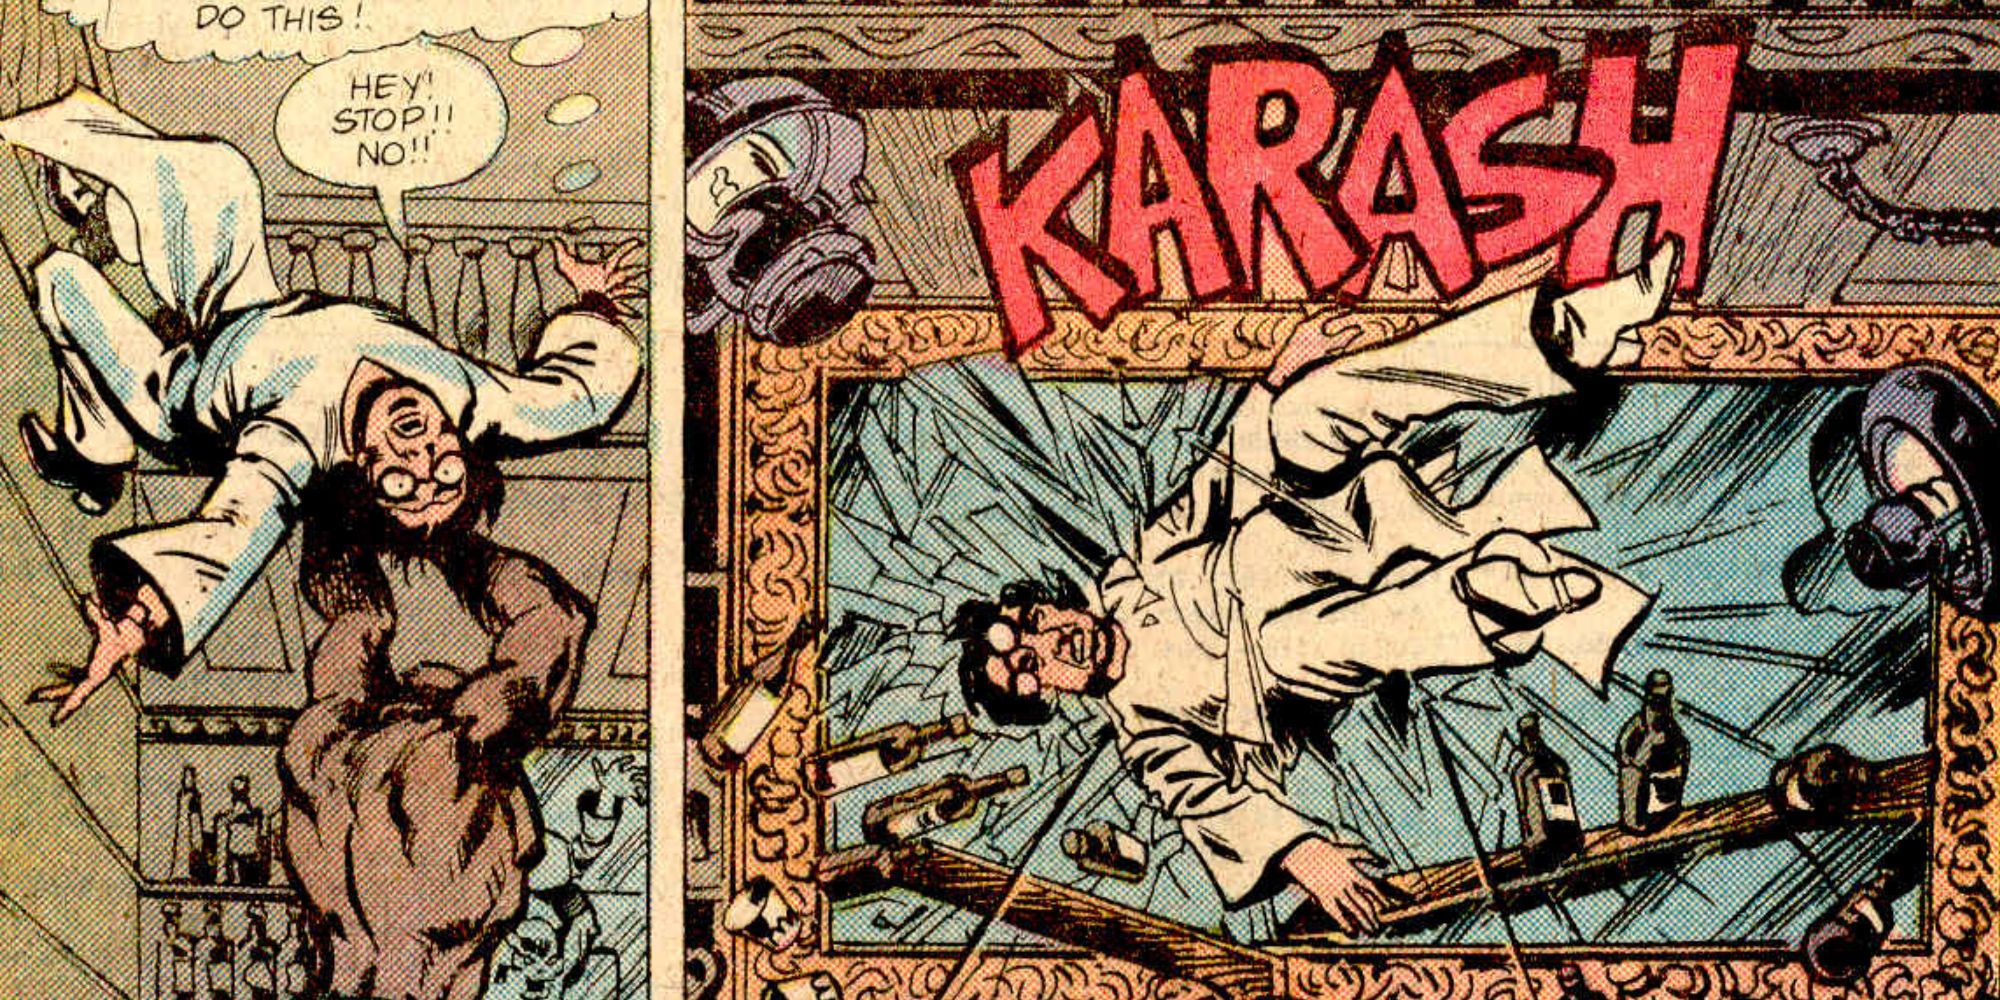 Werewolf By Night joga o Dr. Karl Malus através de uma janela na Marvel Comics.